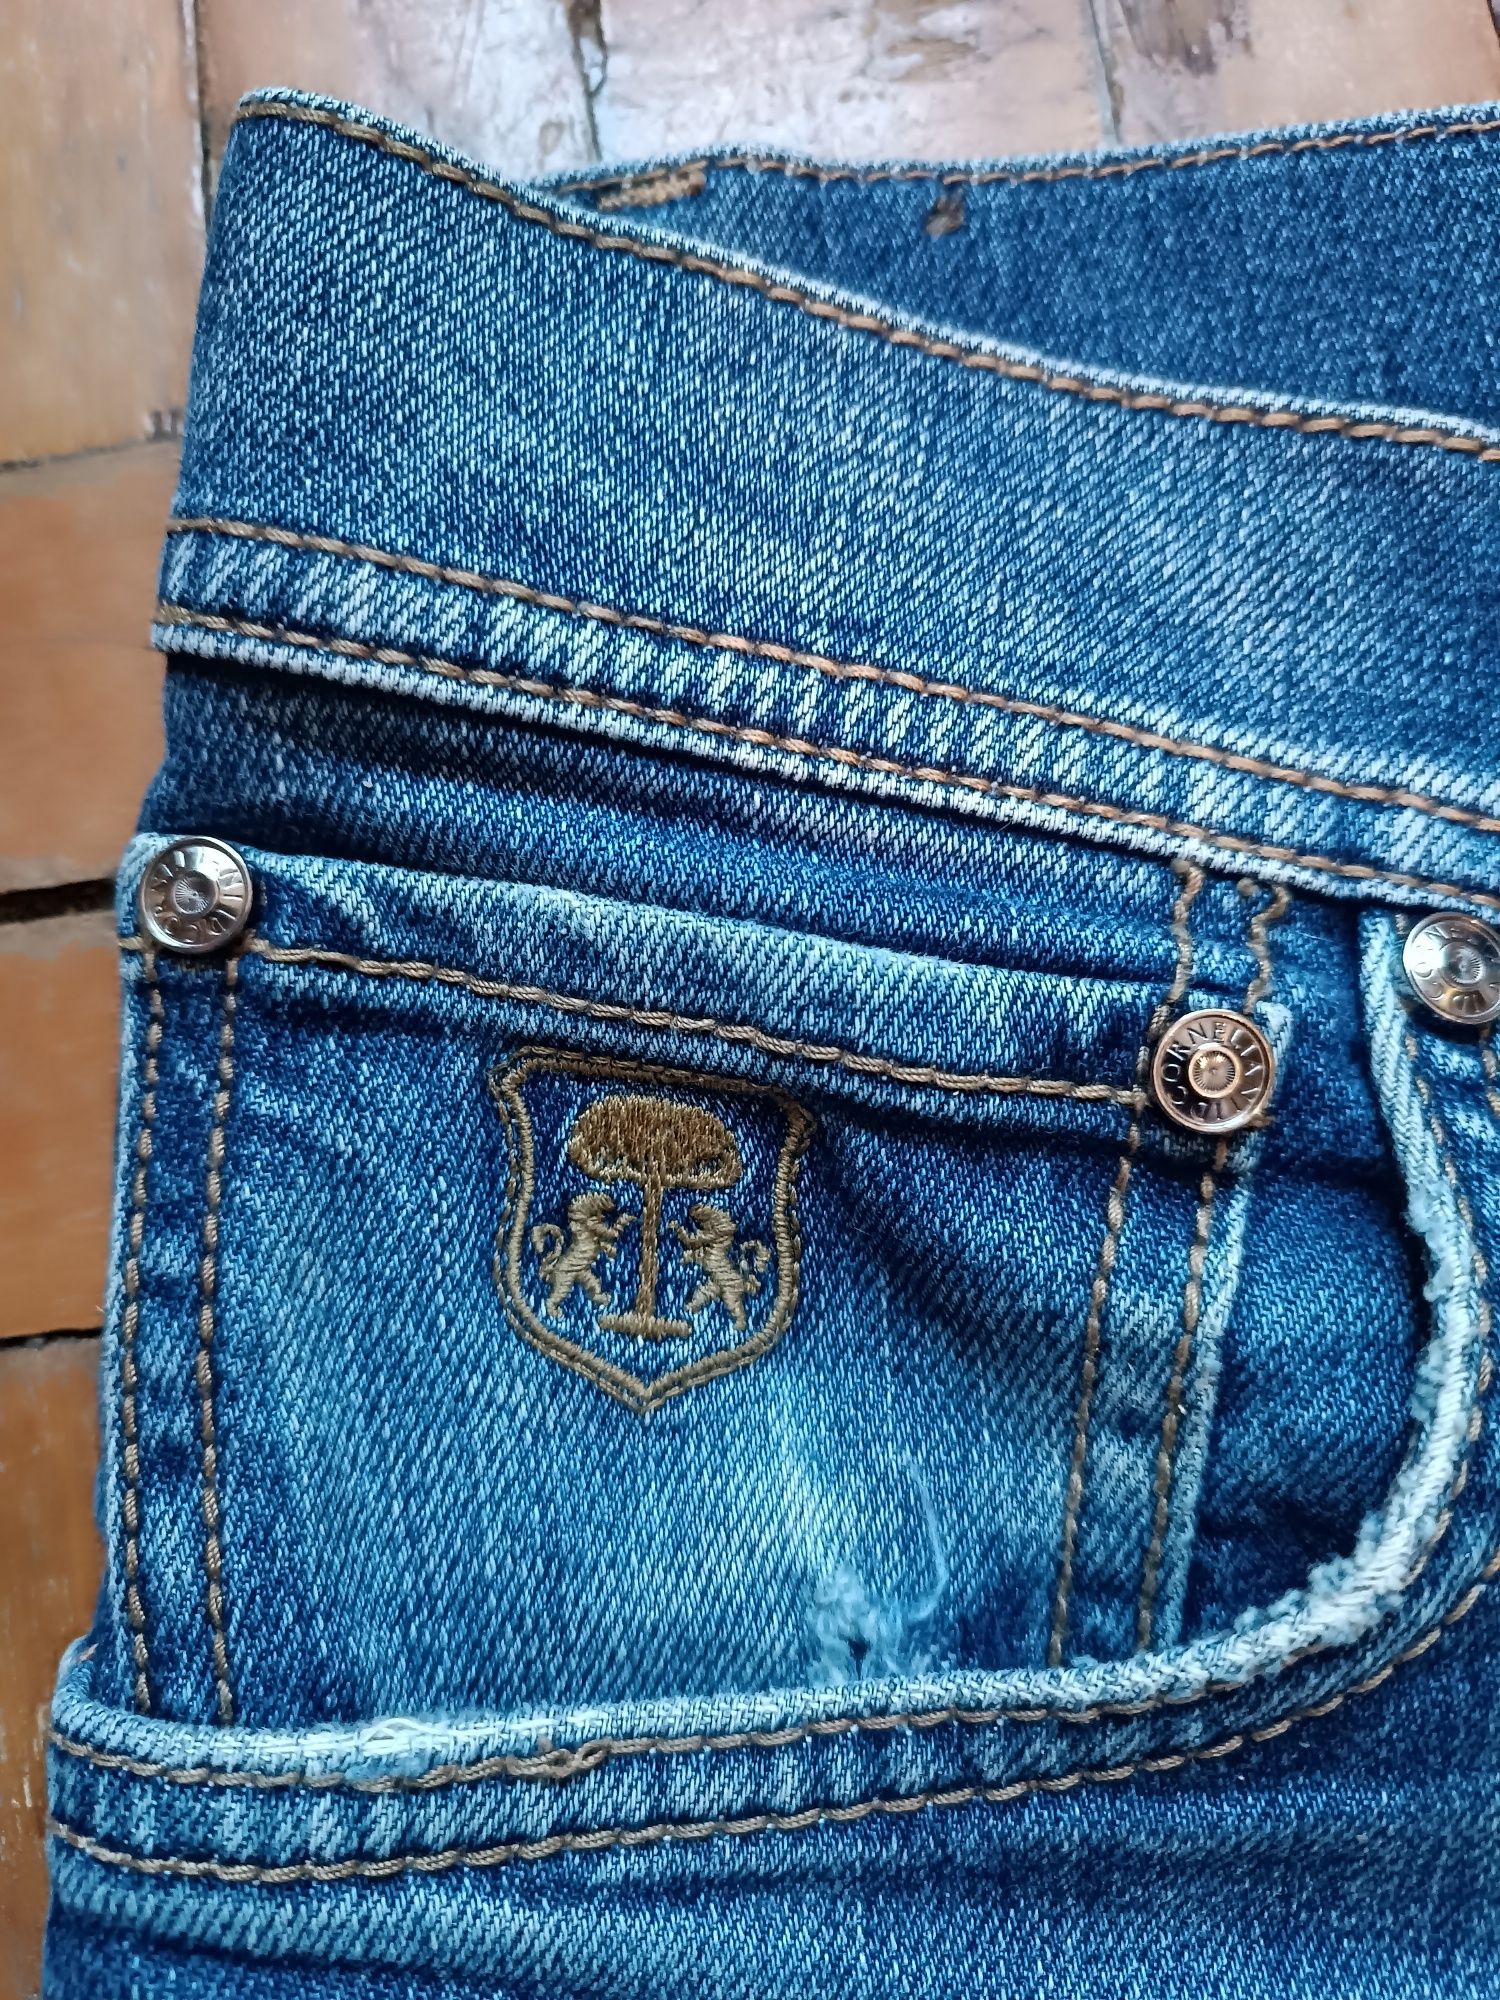 Сині джинси CORNELIANI